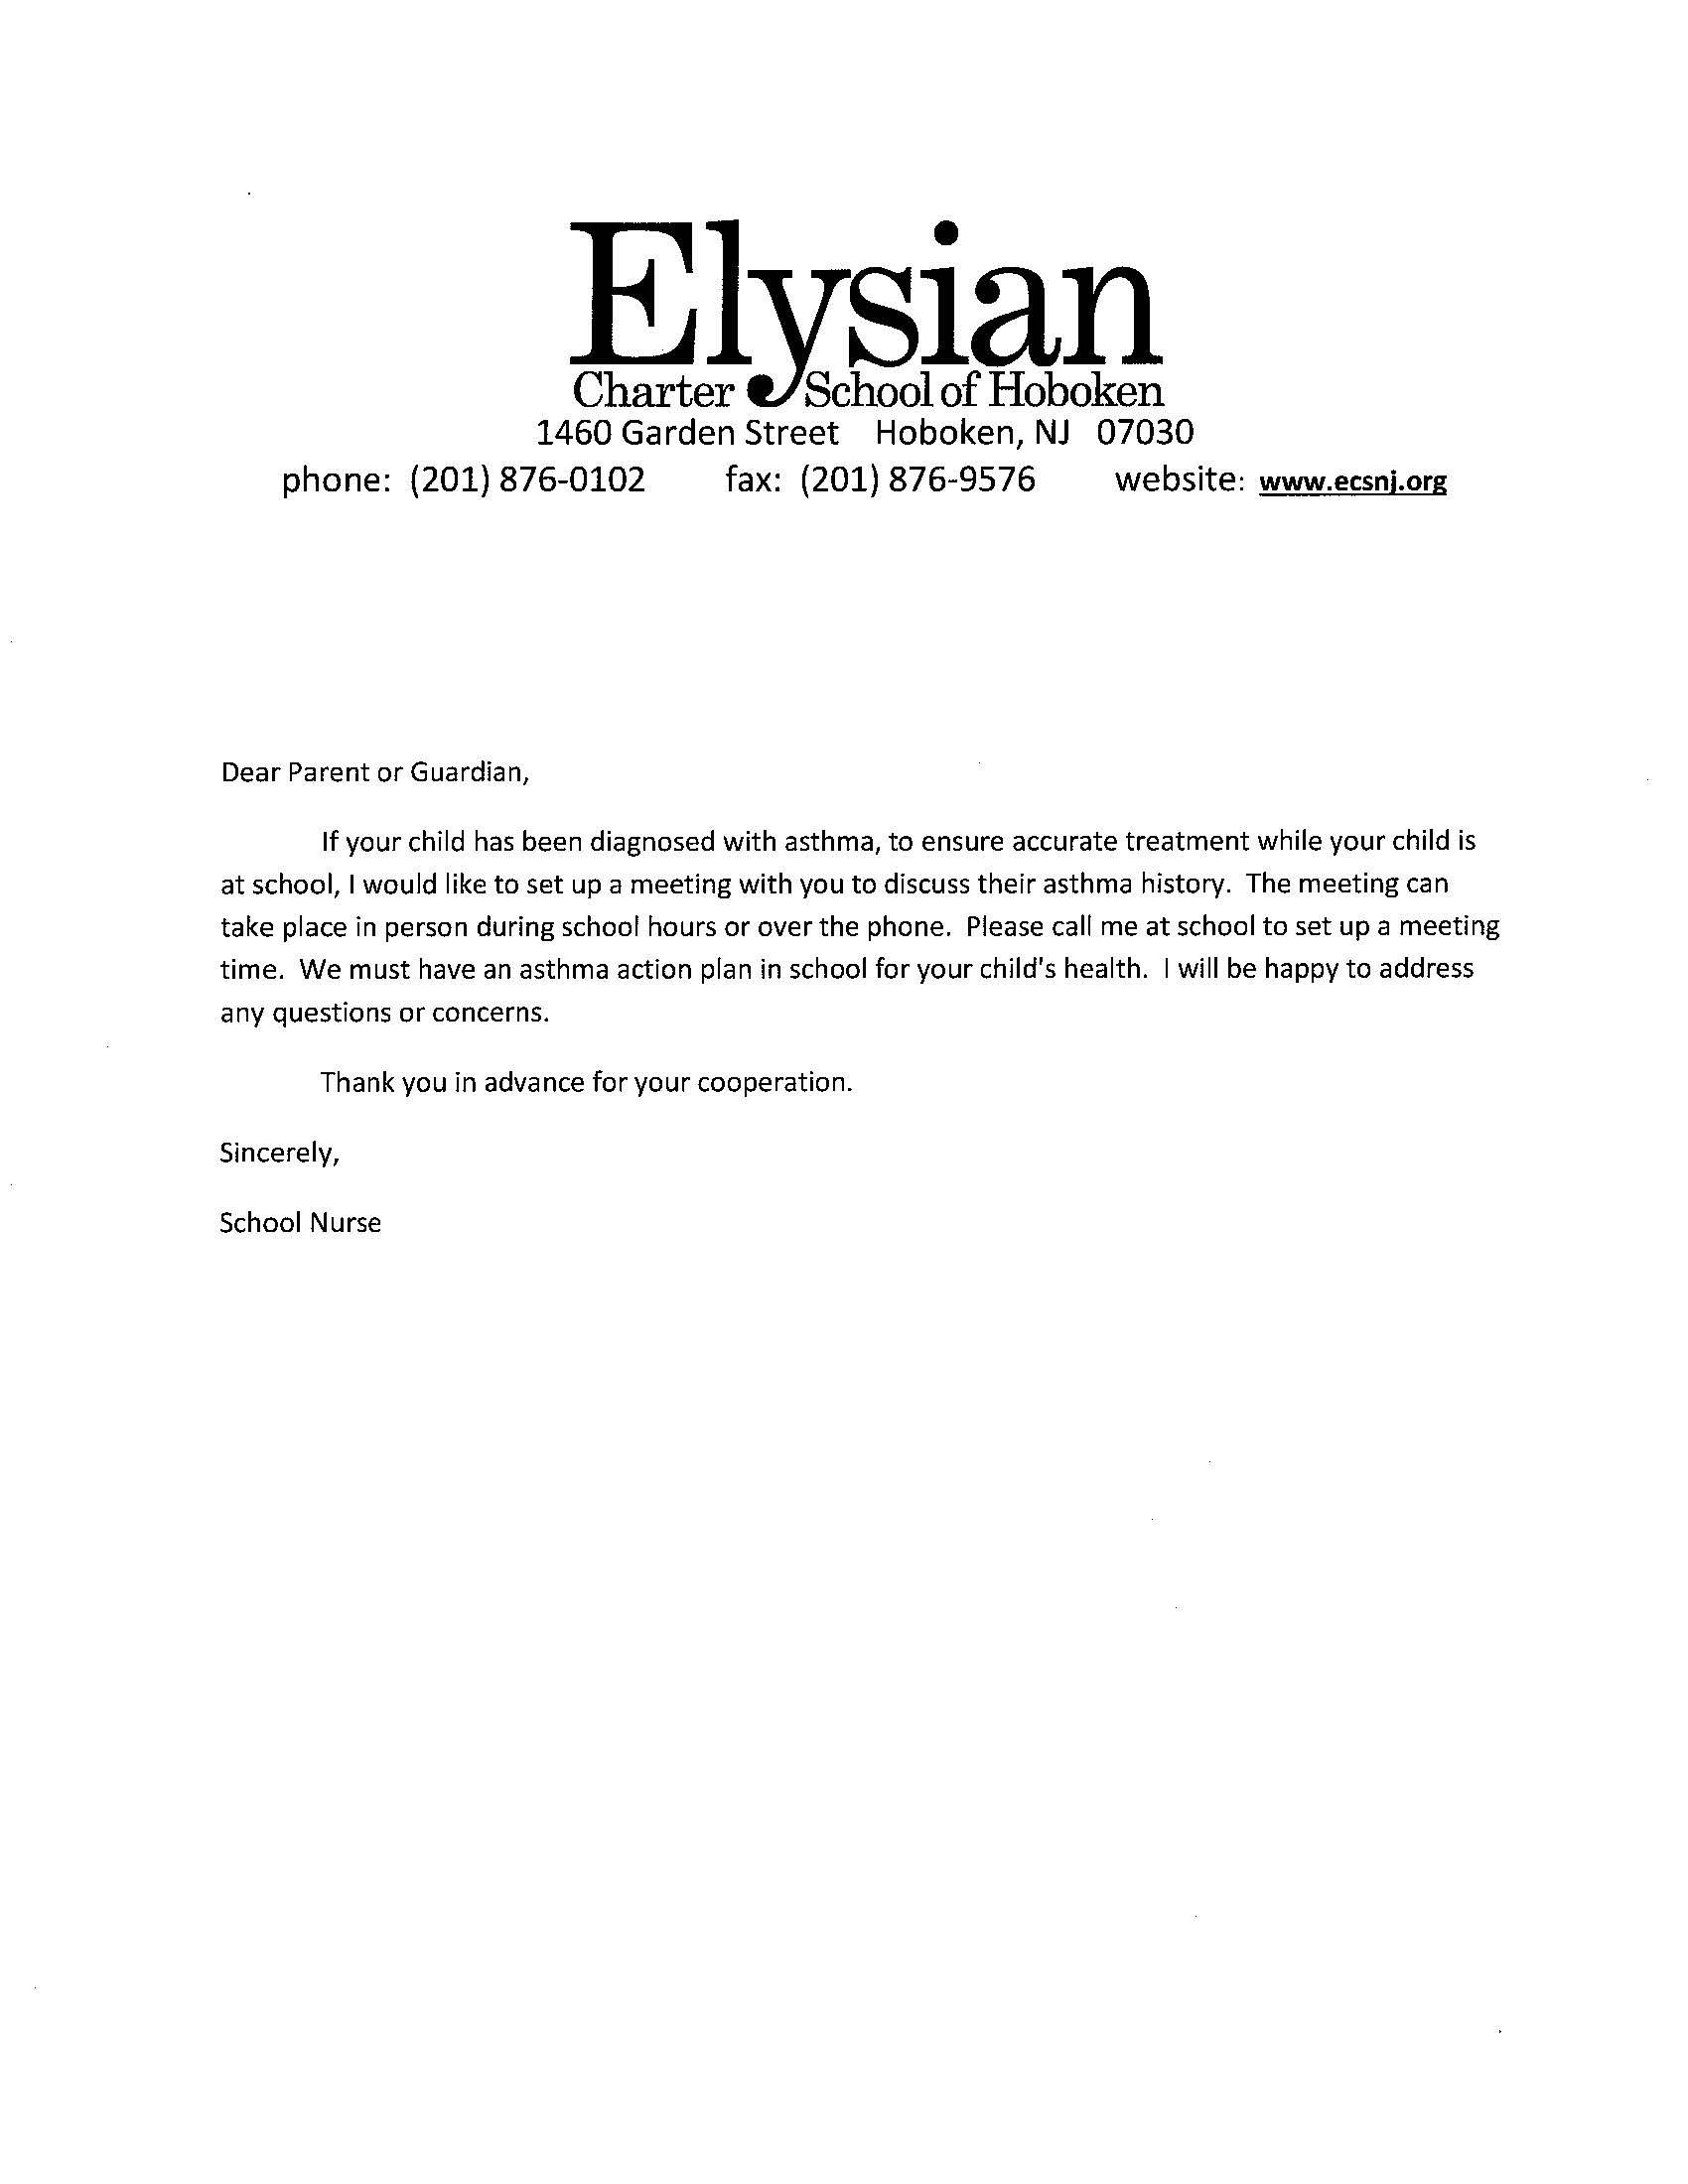 Asthma Action Plan Elysian Charter School